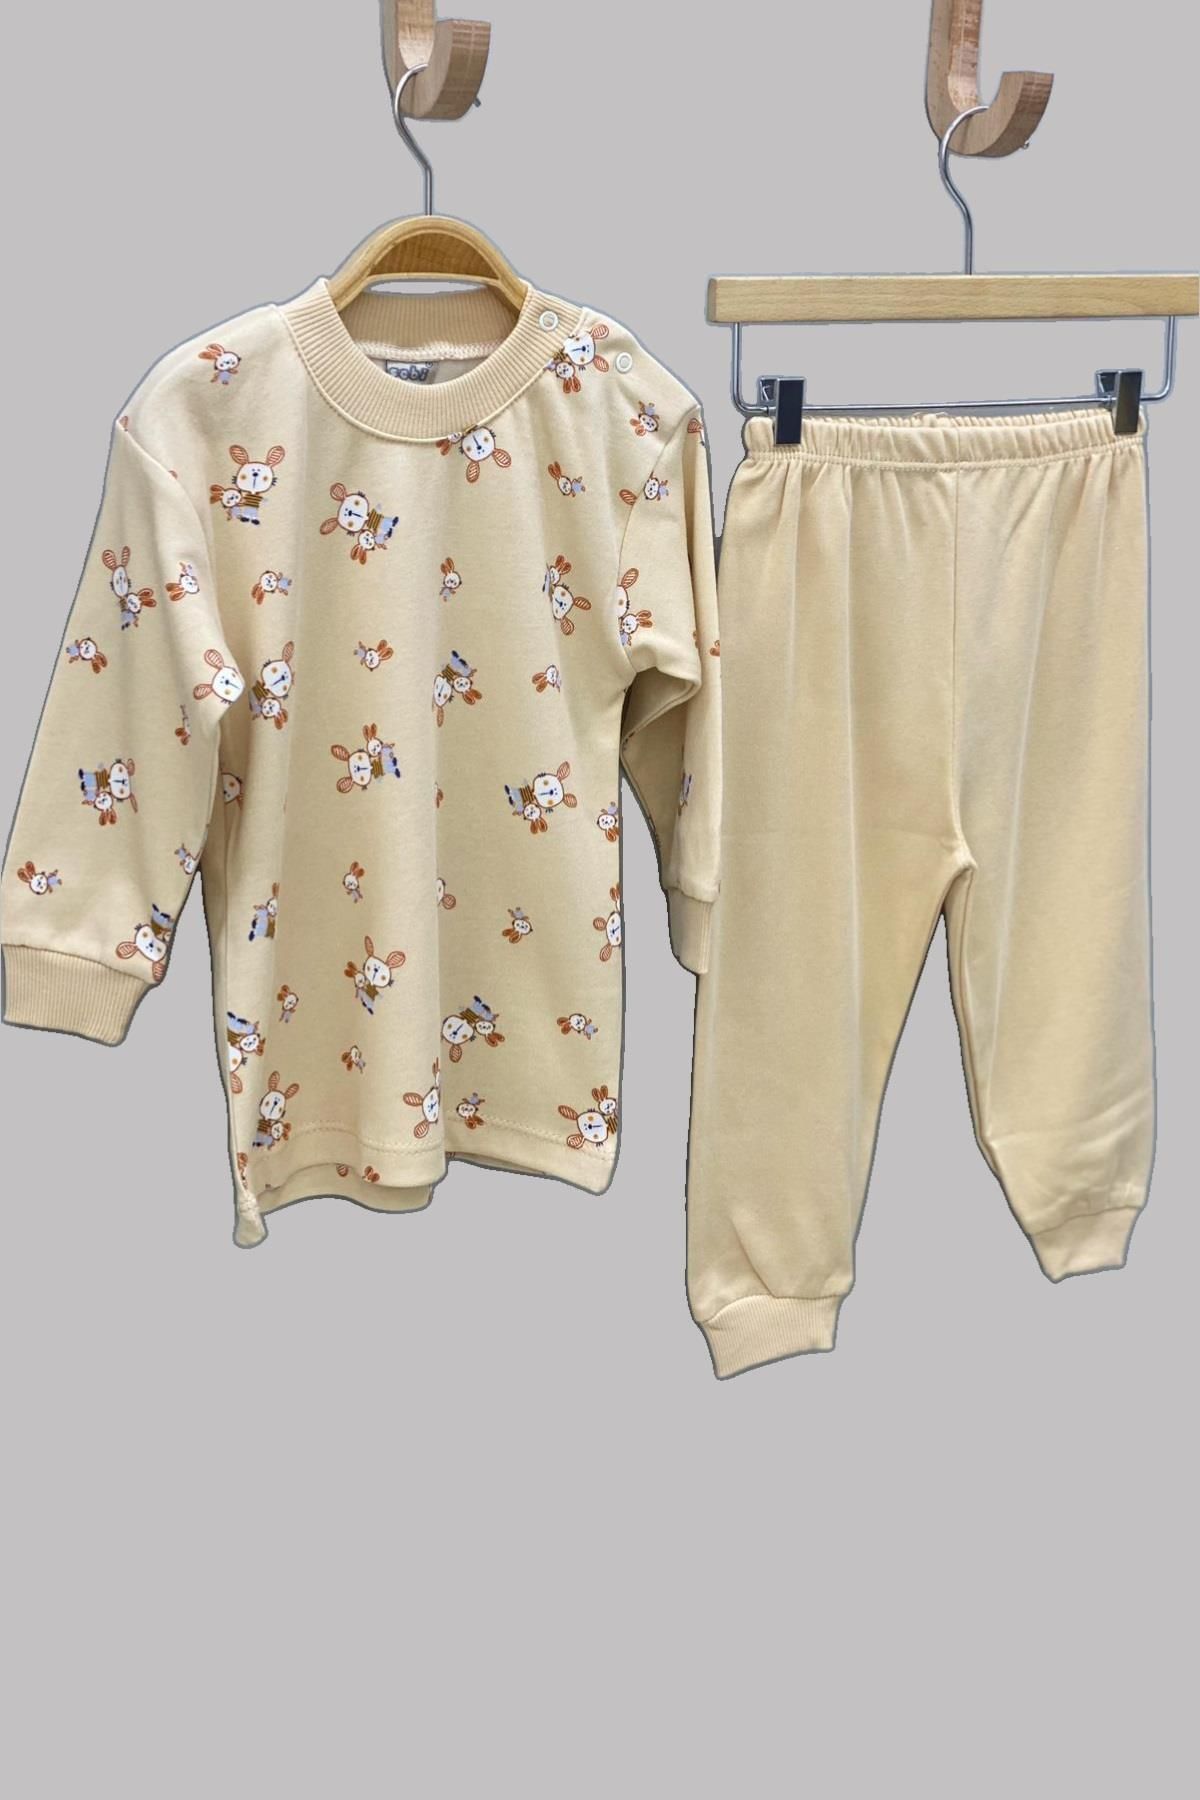 Sebi Bebe Mojo Erkek Bebek Tavşan Desenli Pijama Takımı 2419 Bej